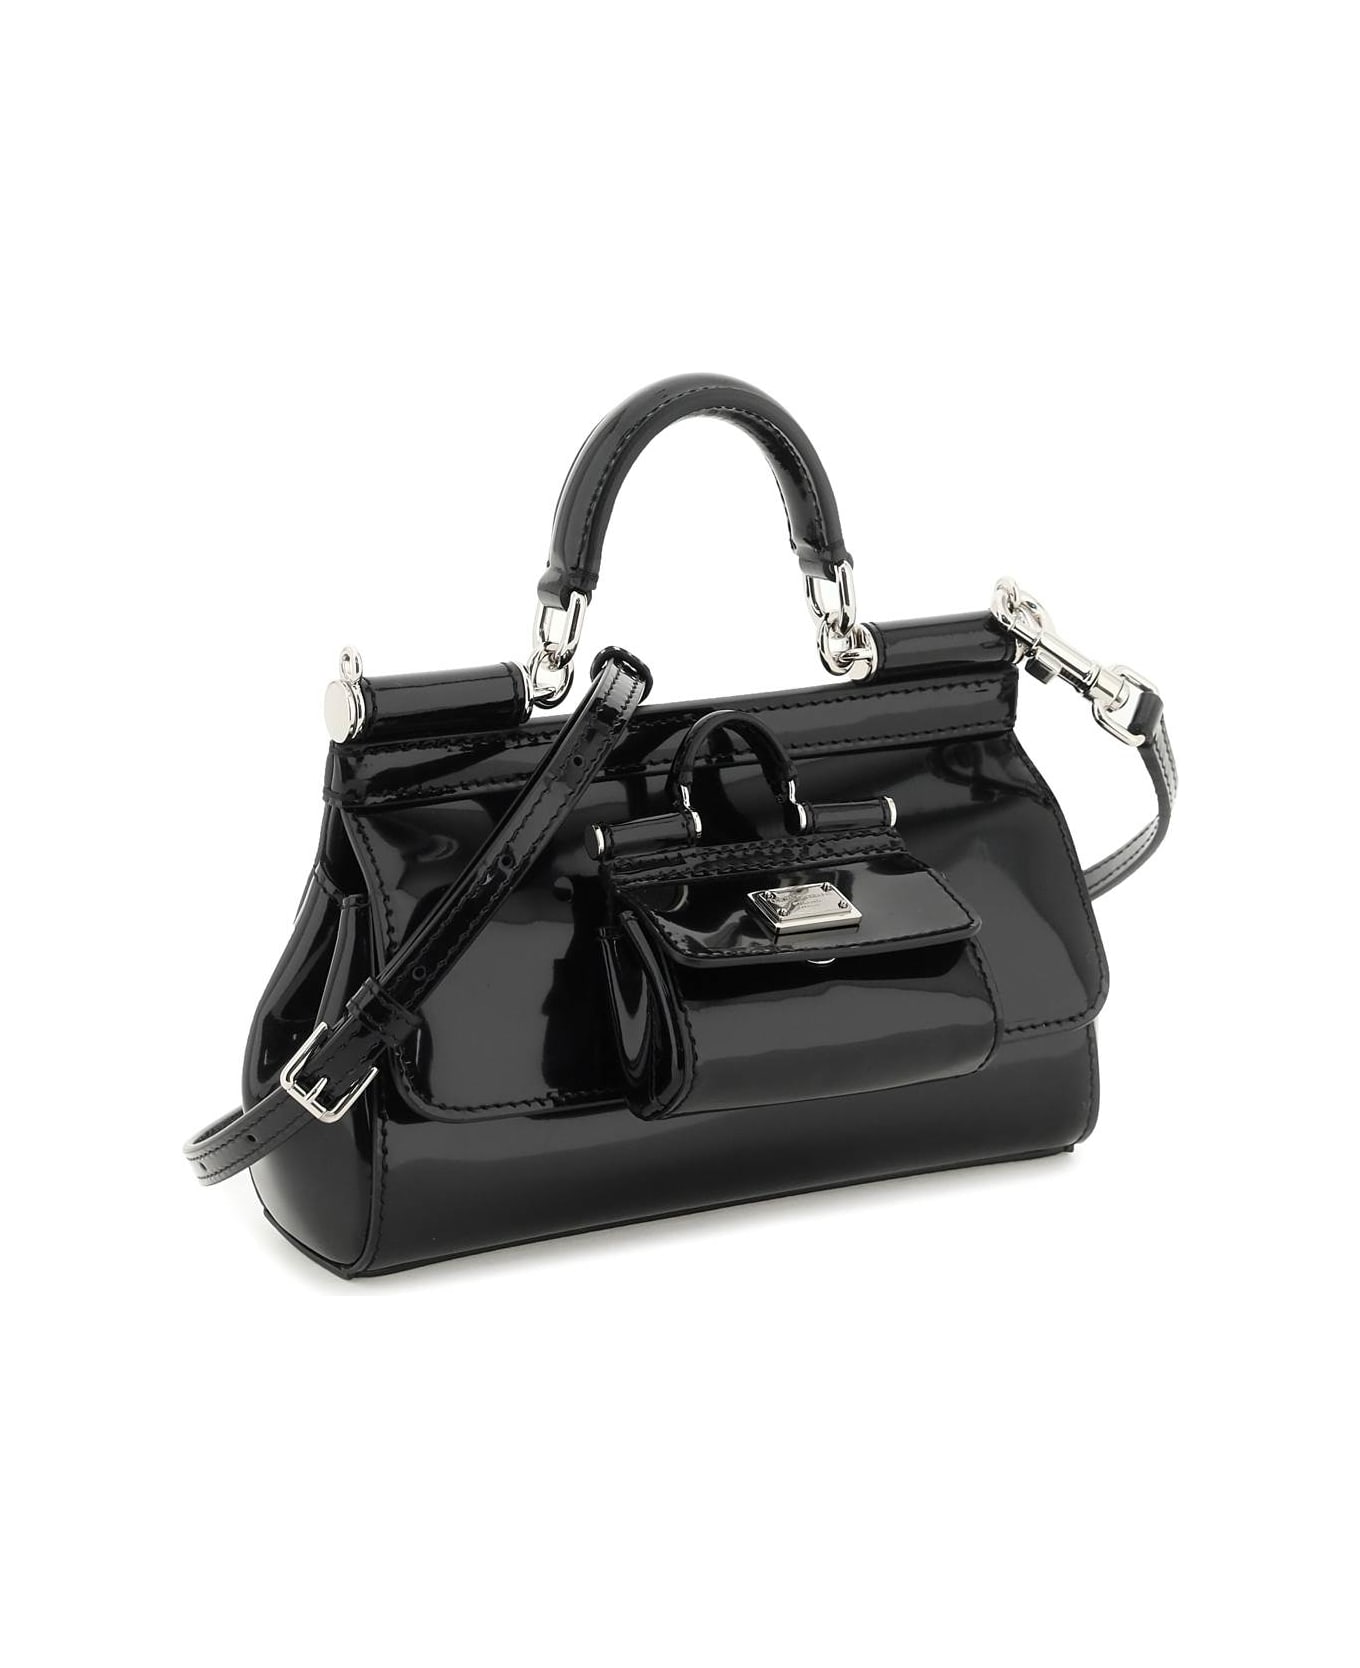 Dolce & Gabbana Sicily Bag With Coin Purse - NERO (Black)